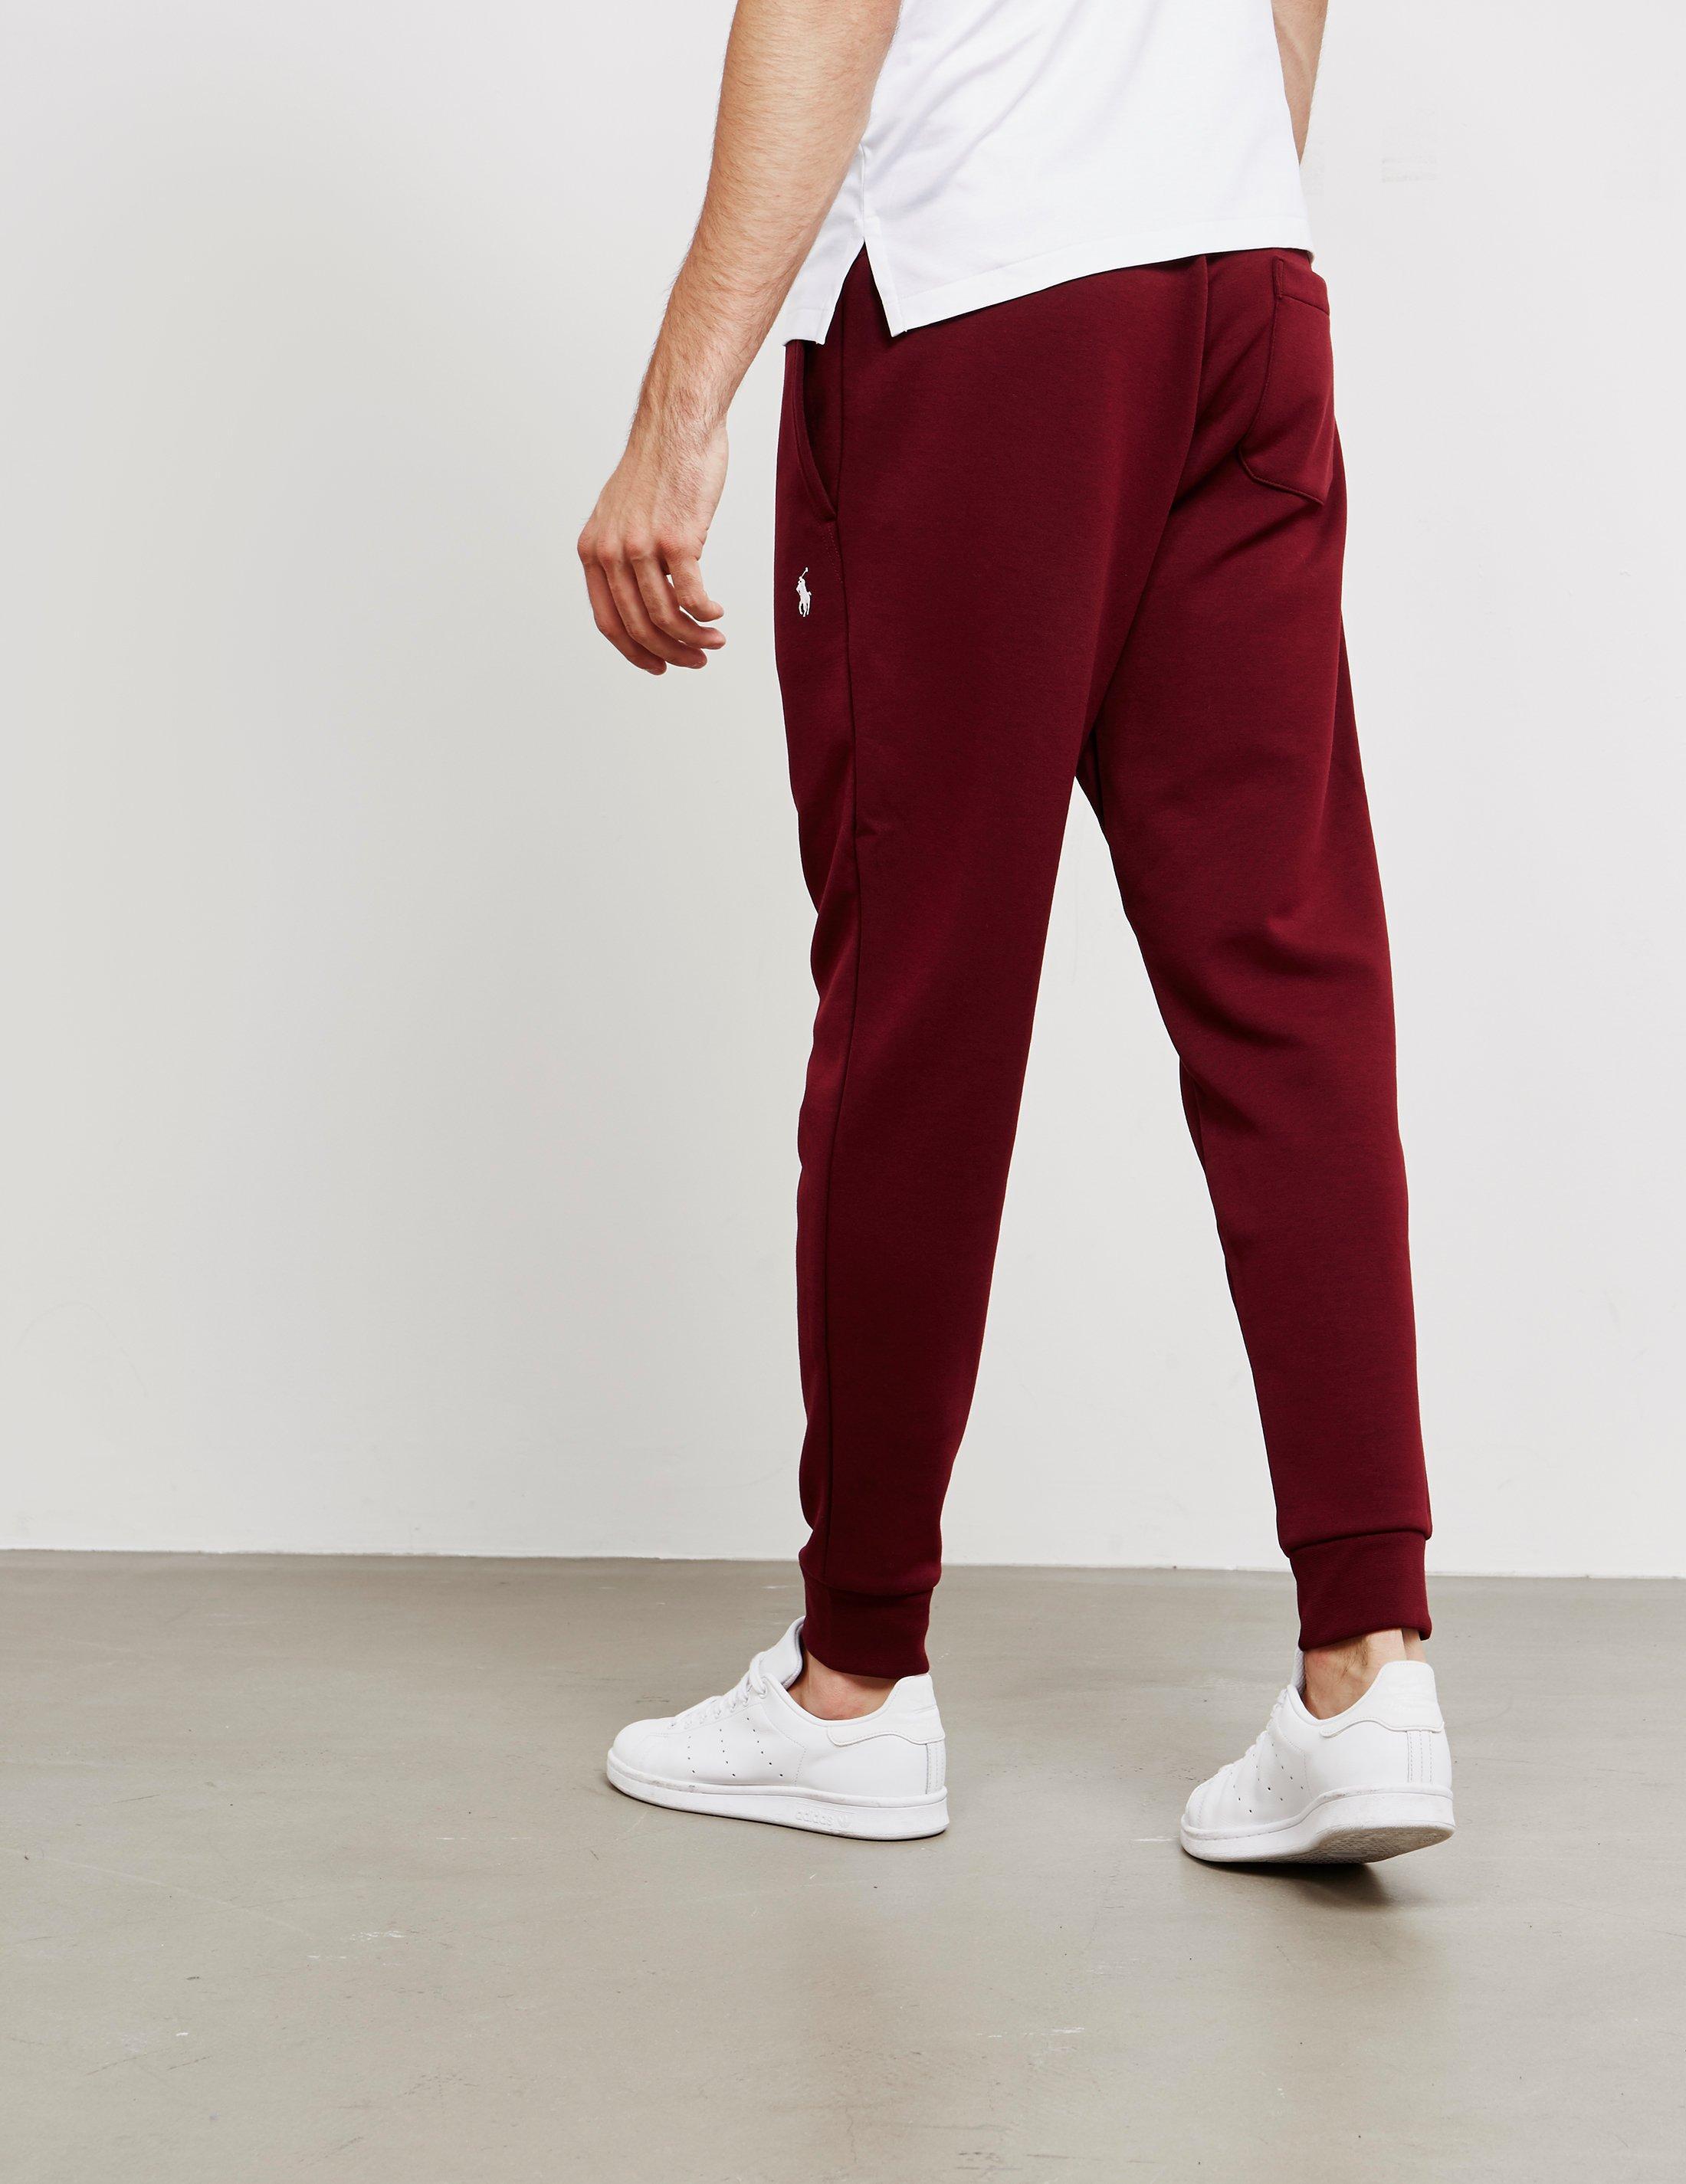 Polo Ralph Lauren Mens Tech Fleece Track Pants Red for Men - Lyst